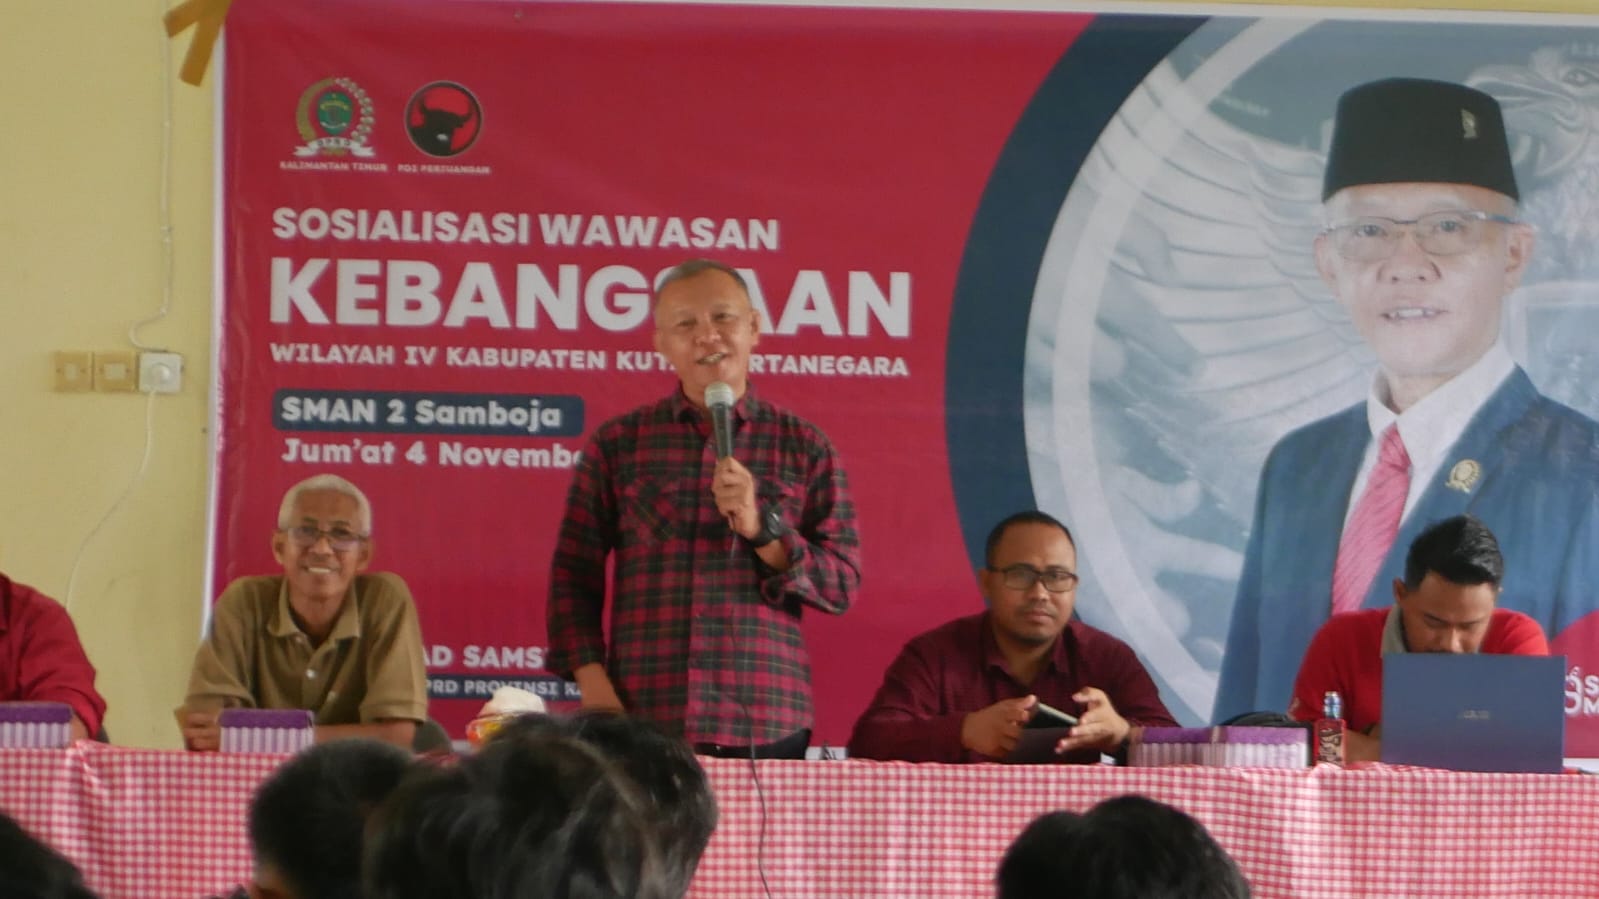 Wakil Ketua DPRD Kaltim Muhammad Samsun Sosialisasi Wawasan Kebangsaan di SMA Negeri 2 Samboja, Kutai Kartanegara. (foto : Exclusive)